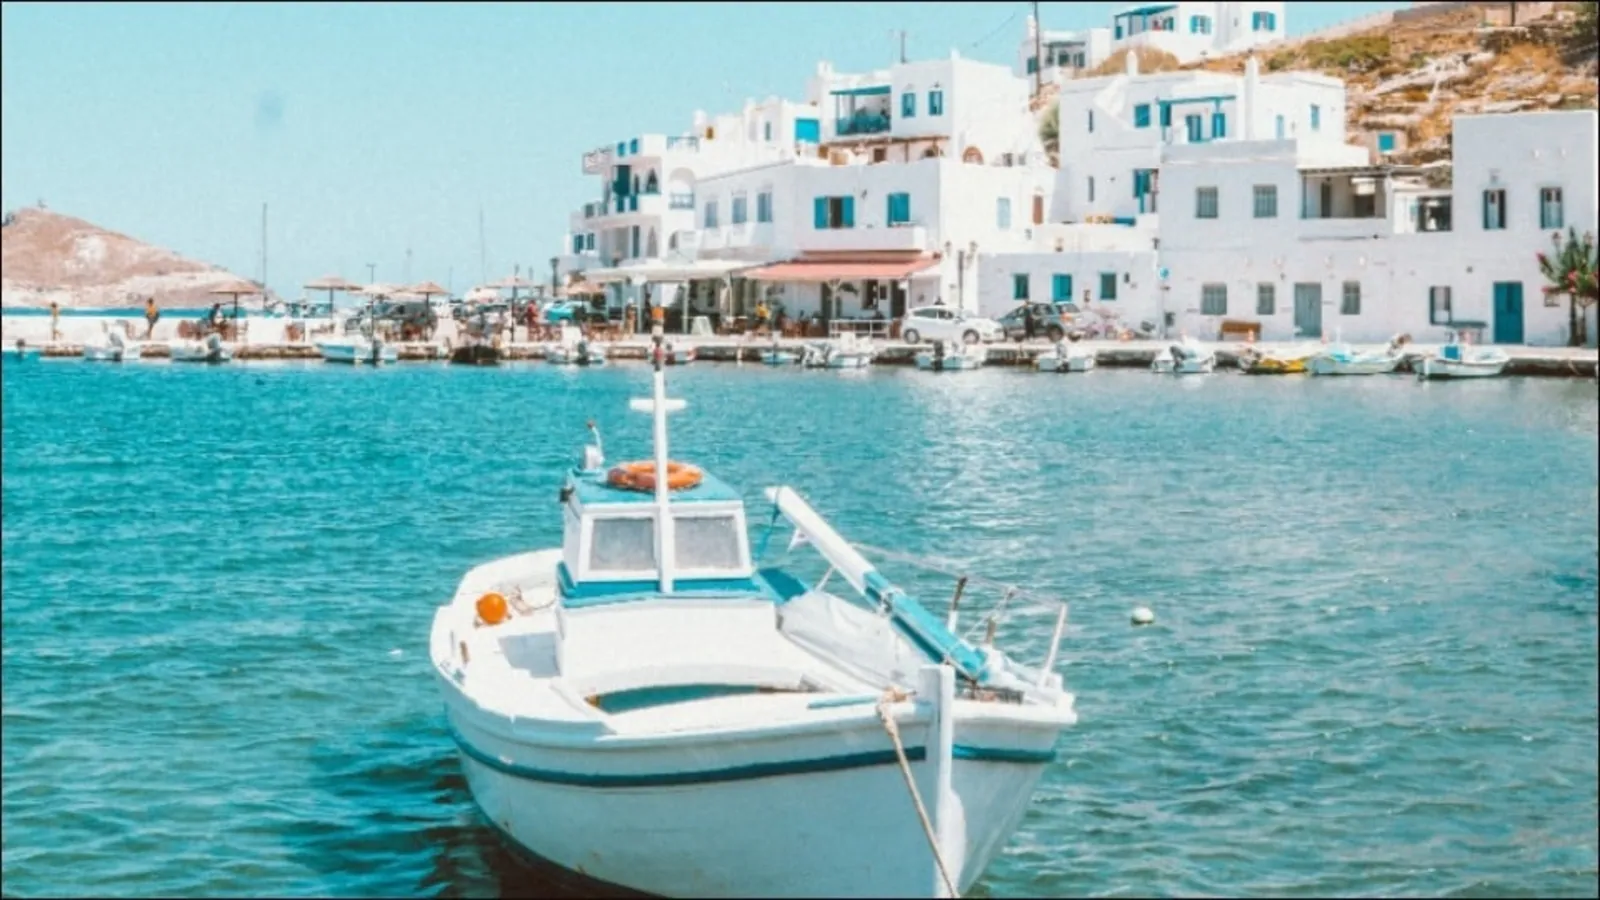 Greece finally lifts Covid-19 curbs for travellers ahead of key summer season